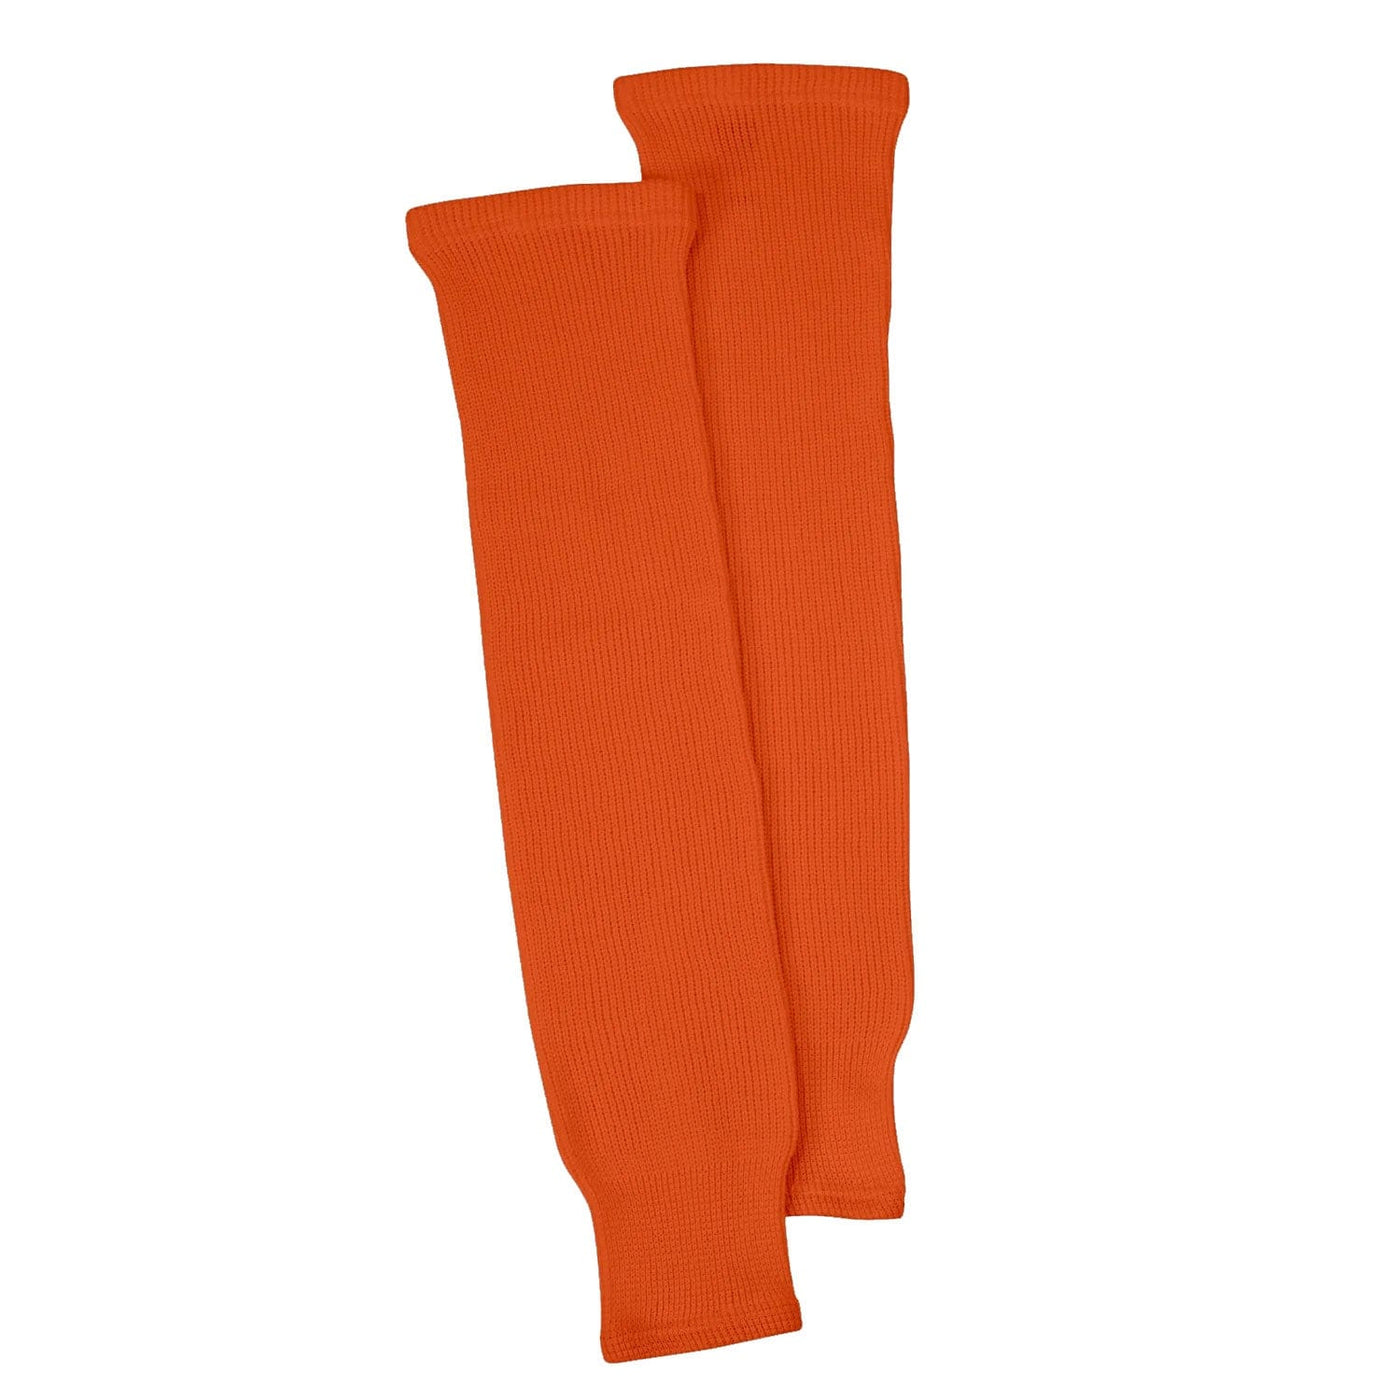 Orange Knit Hockey Socks - The Hockey Shop Source For Sports